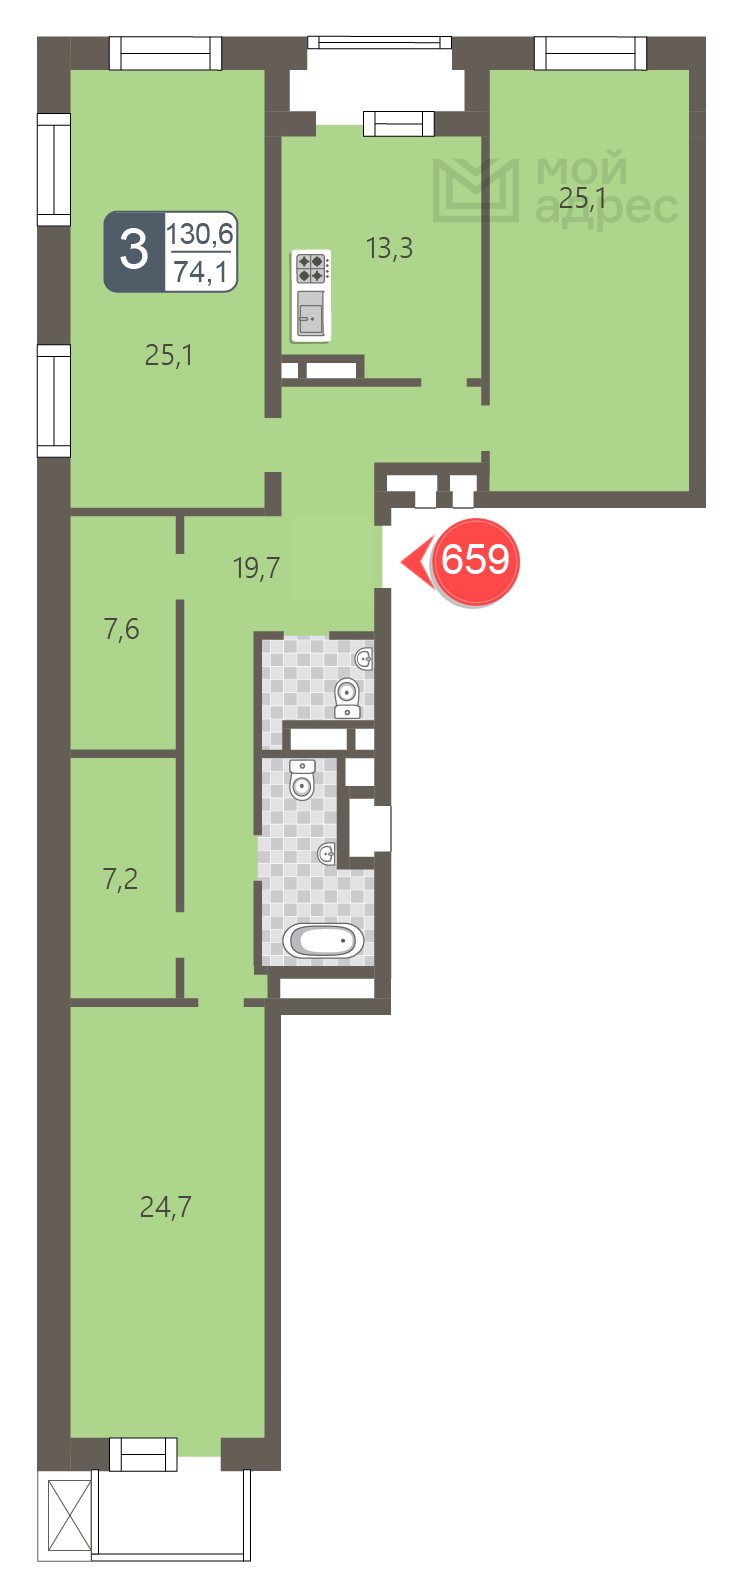 3 комн. квартира, 130.6 м², 3 этаж 